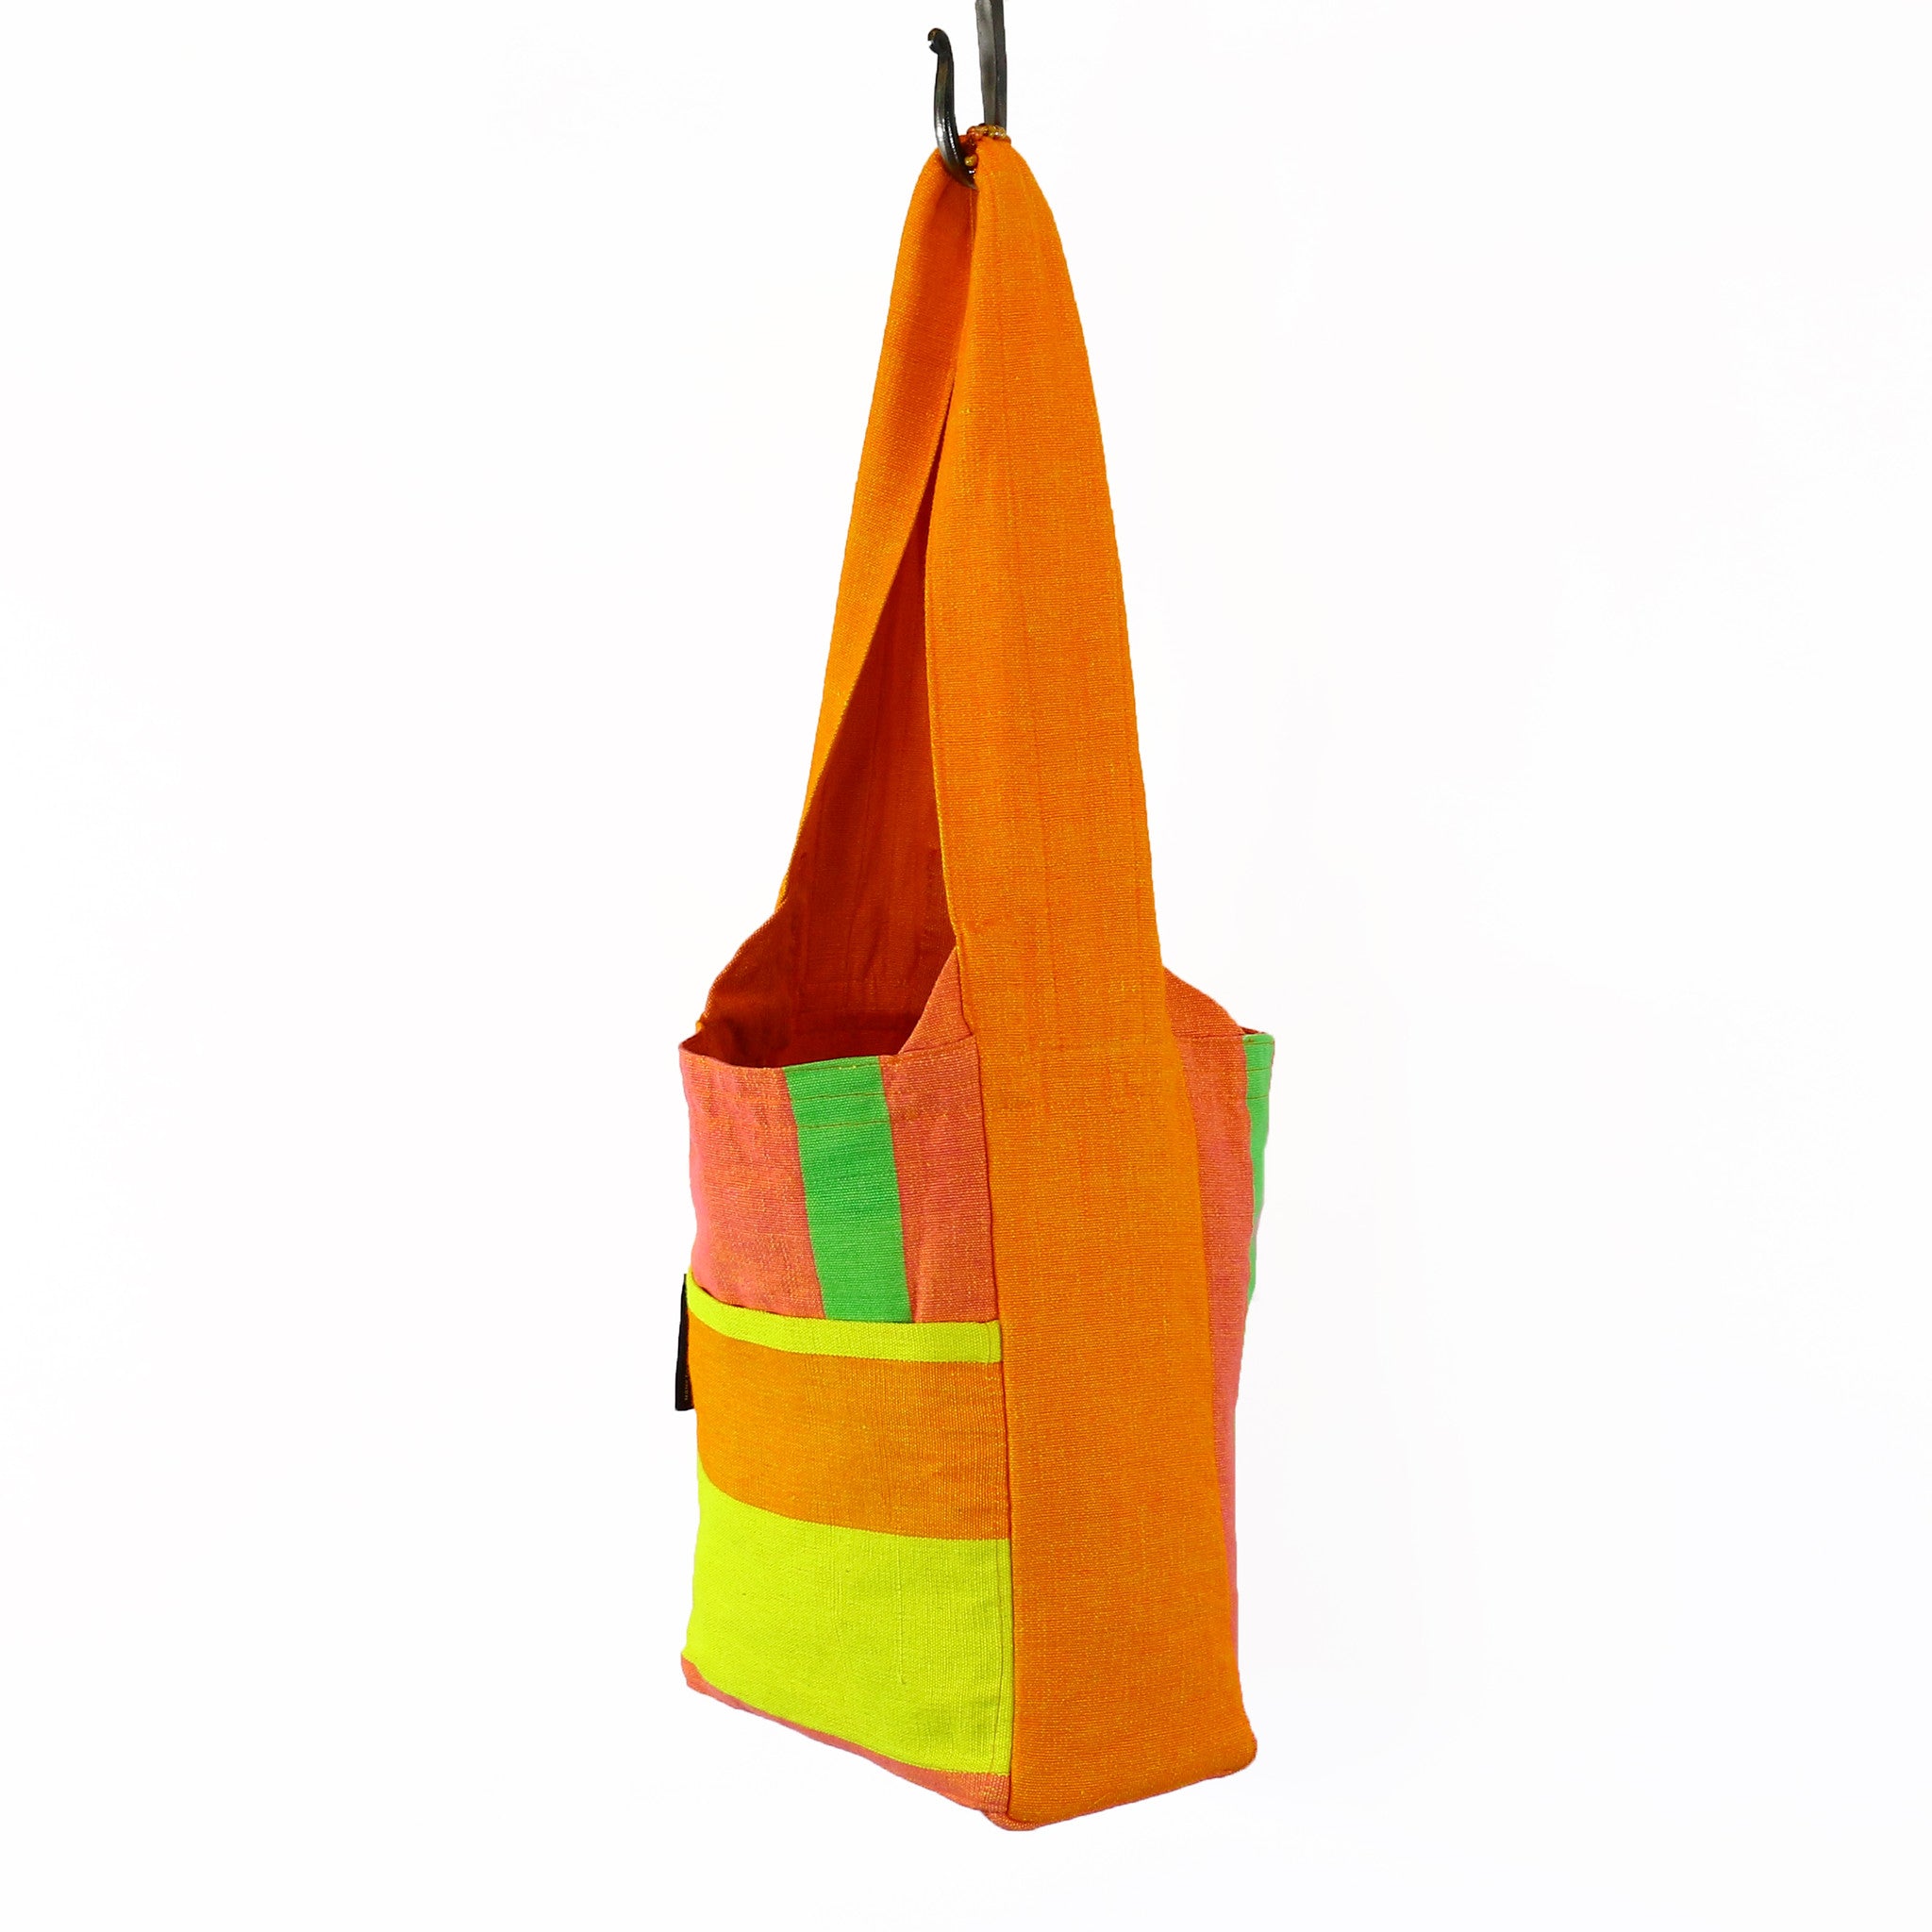 The Versatile Shoulder Bag – Mango fabric shown (medium size)